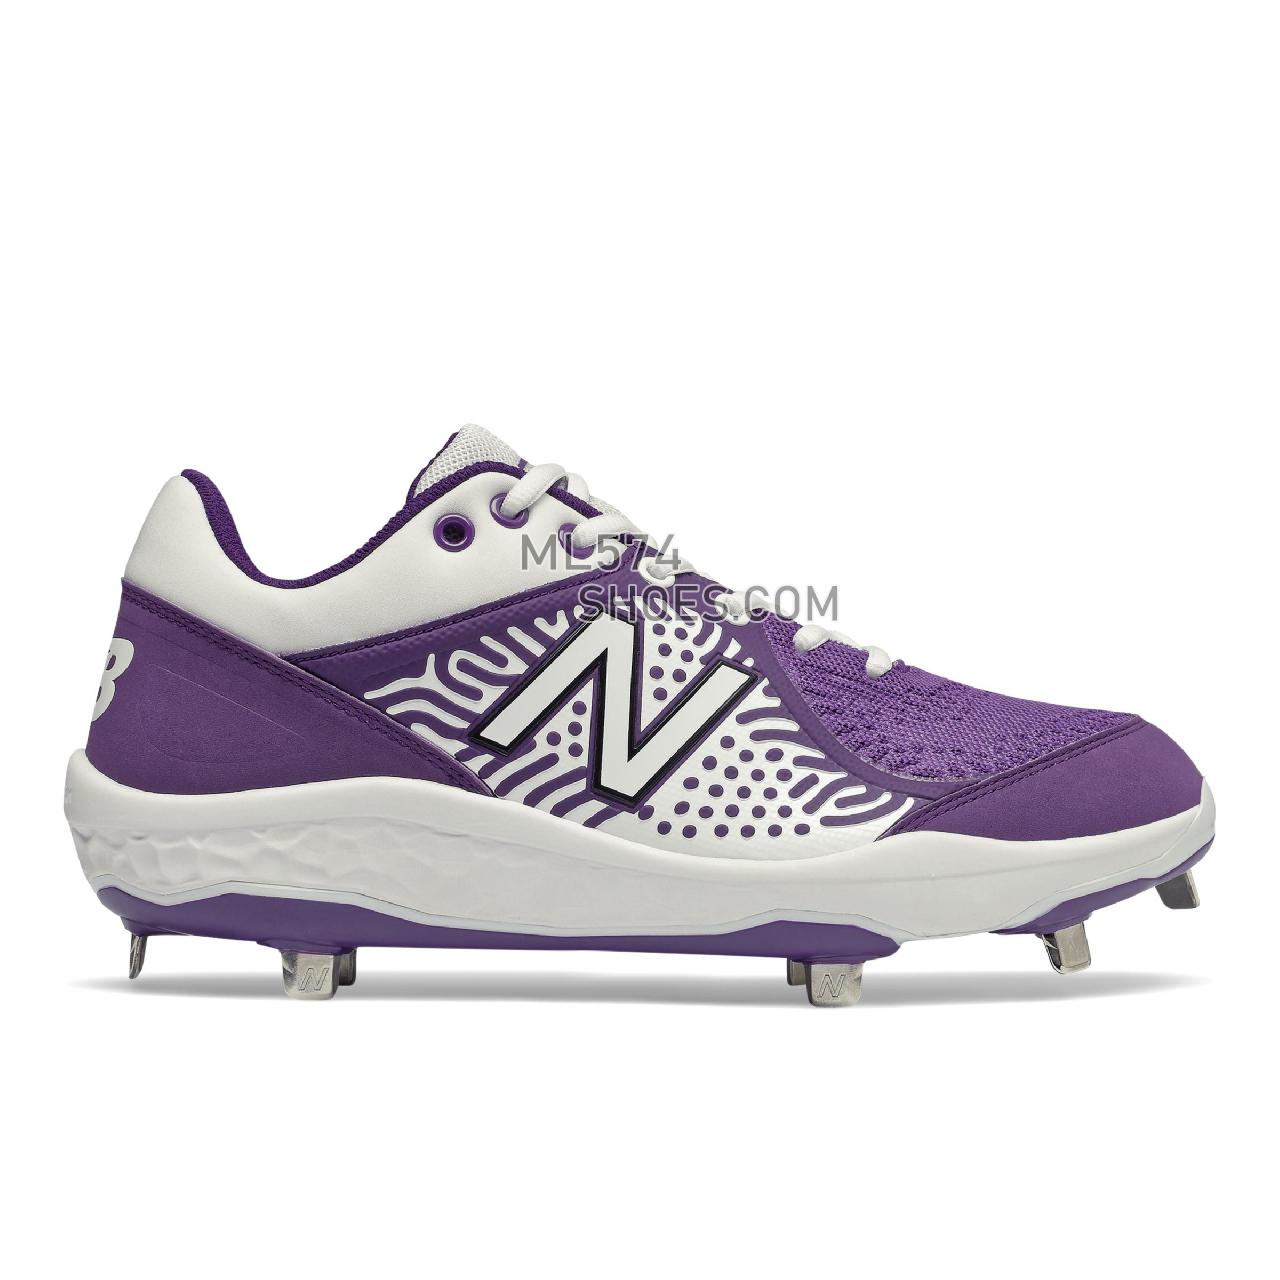 New Balance Fresh Foam 3000 v5 Metal - Men's Mid-Cut Baseball Cleats - White with Purple - L3000WP5